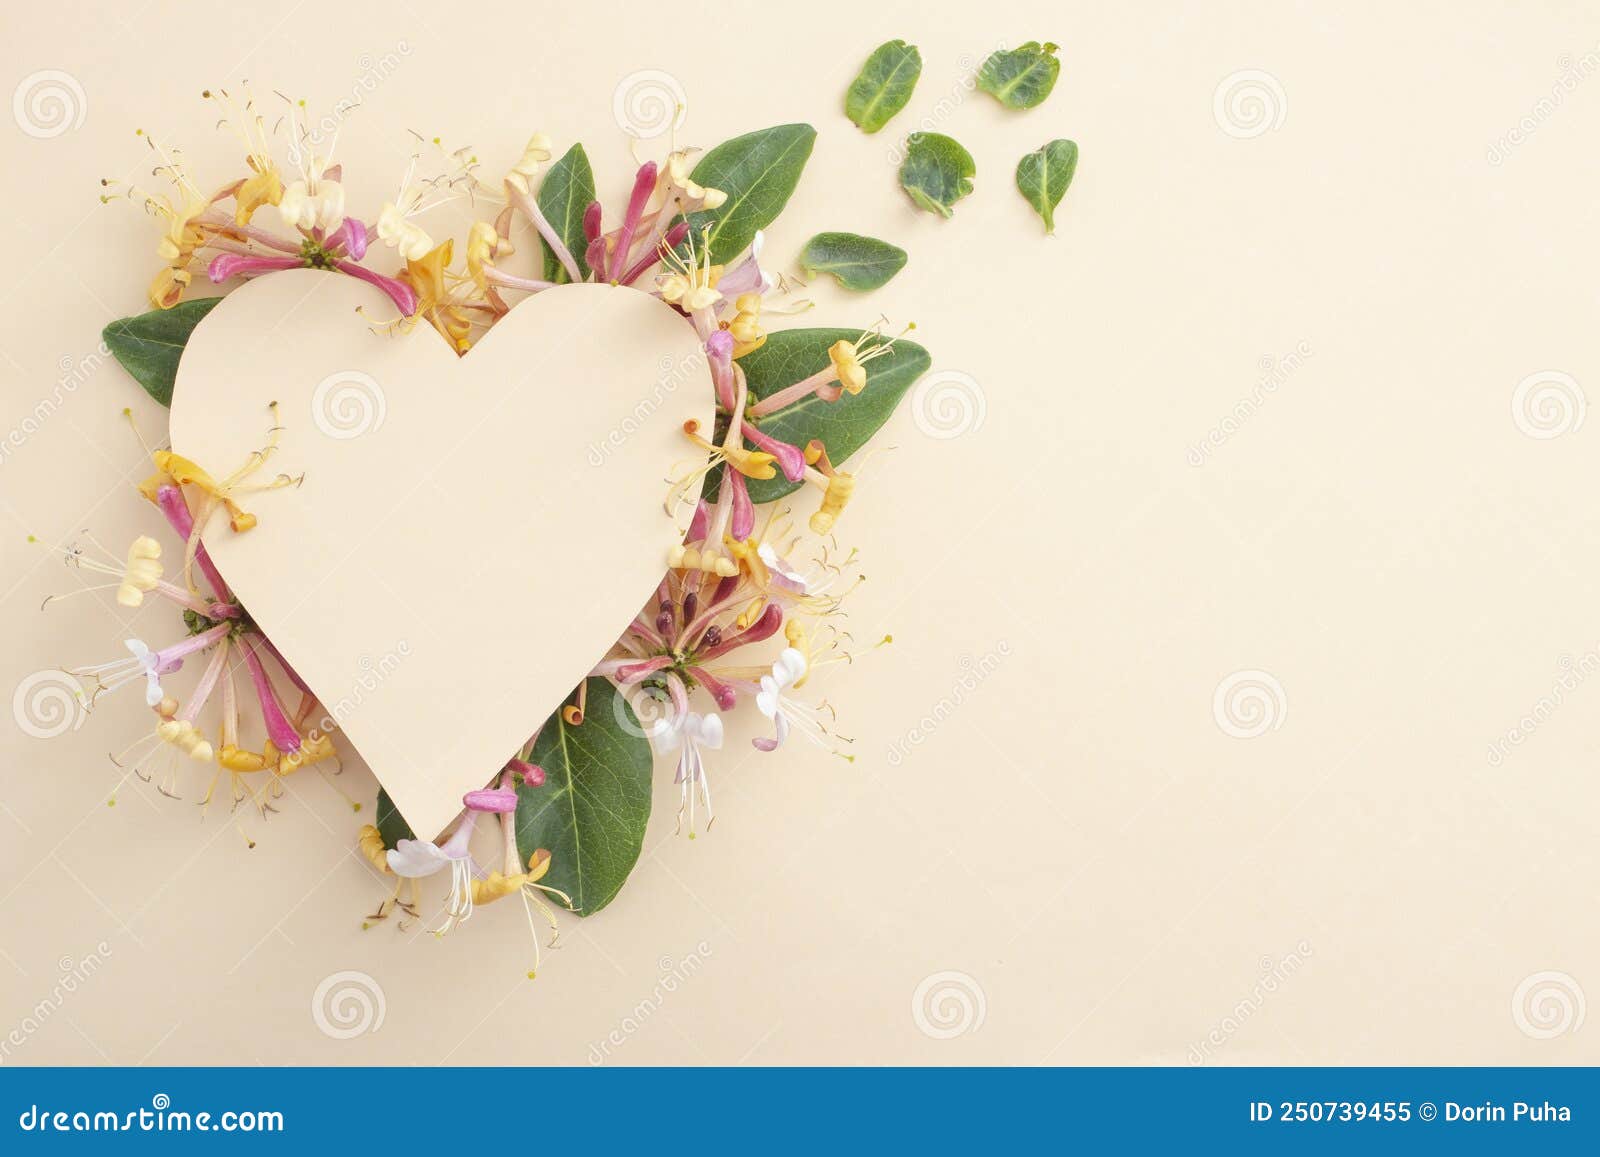 heart made from lonicera periclymenum belgica flowers